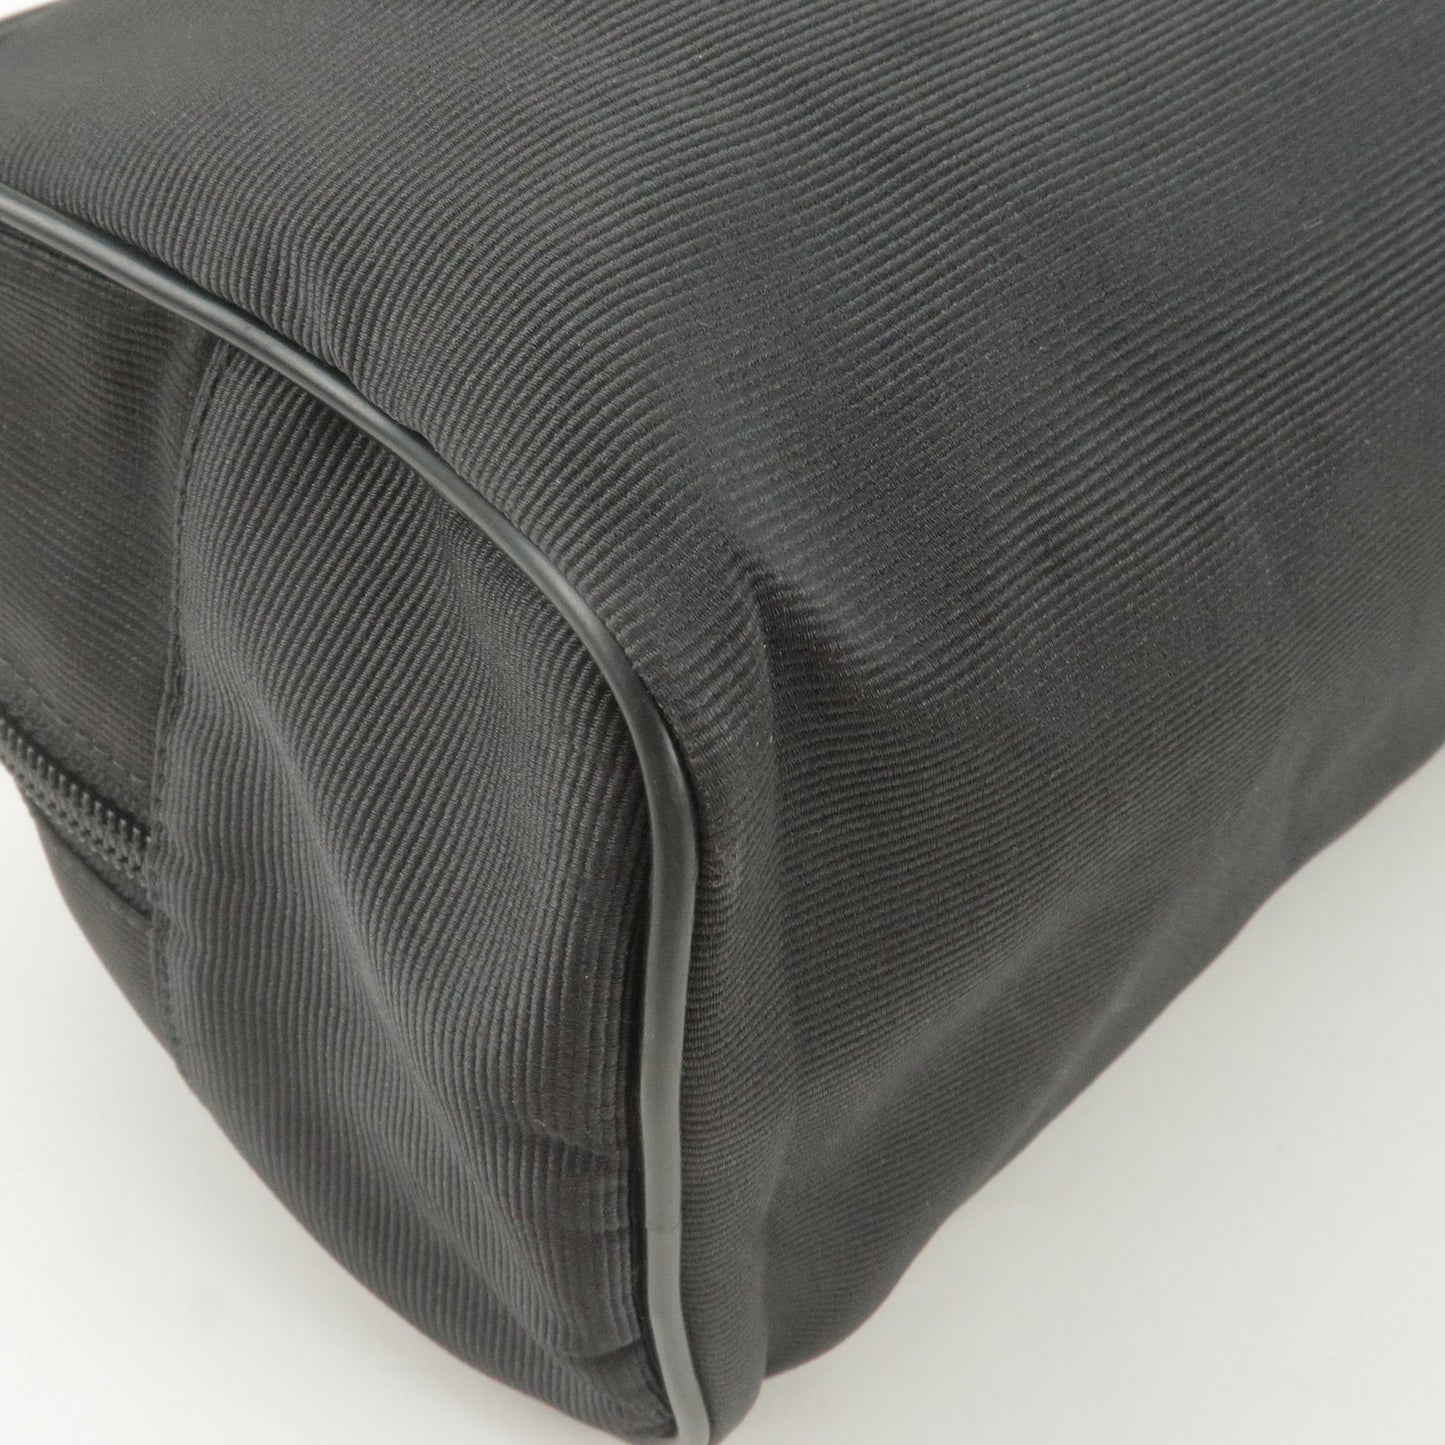 Fendi Logo Canvas Leather Second Pouch Black Beige